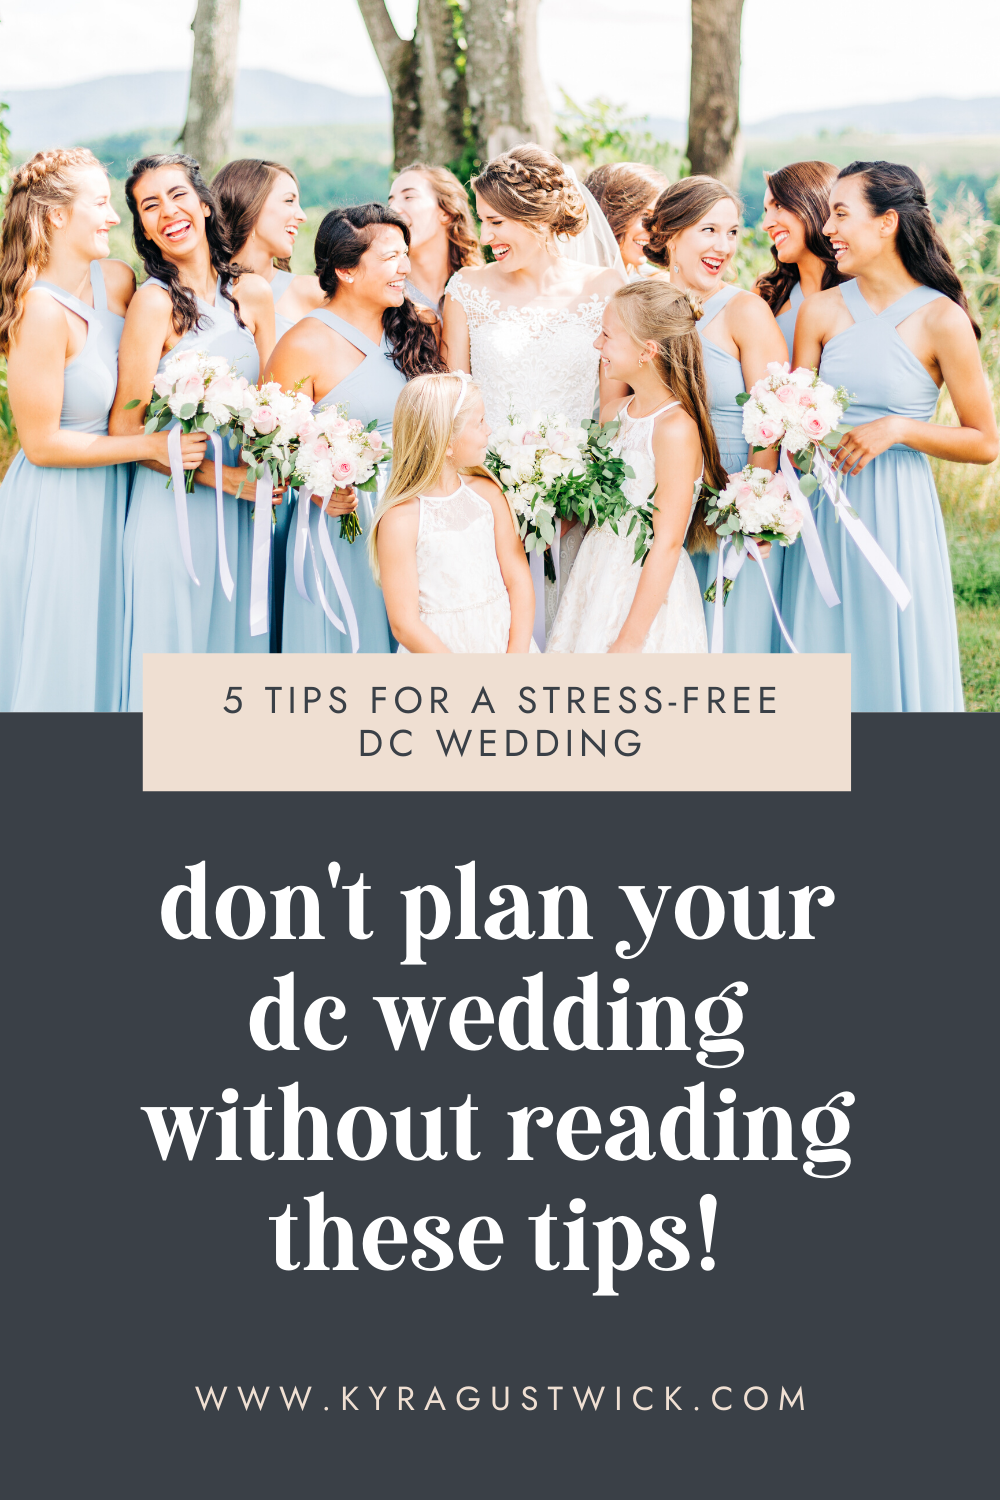 Washington DC Wedding Photographer, Kyra Gustwick, DC Wedding Photographer, Stress-free wedding planning, unique dc wedding, must-see washington dc wedding ideas, 